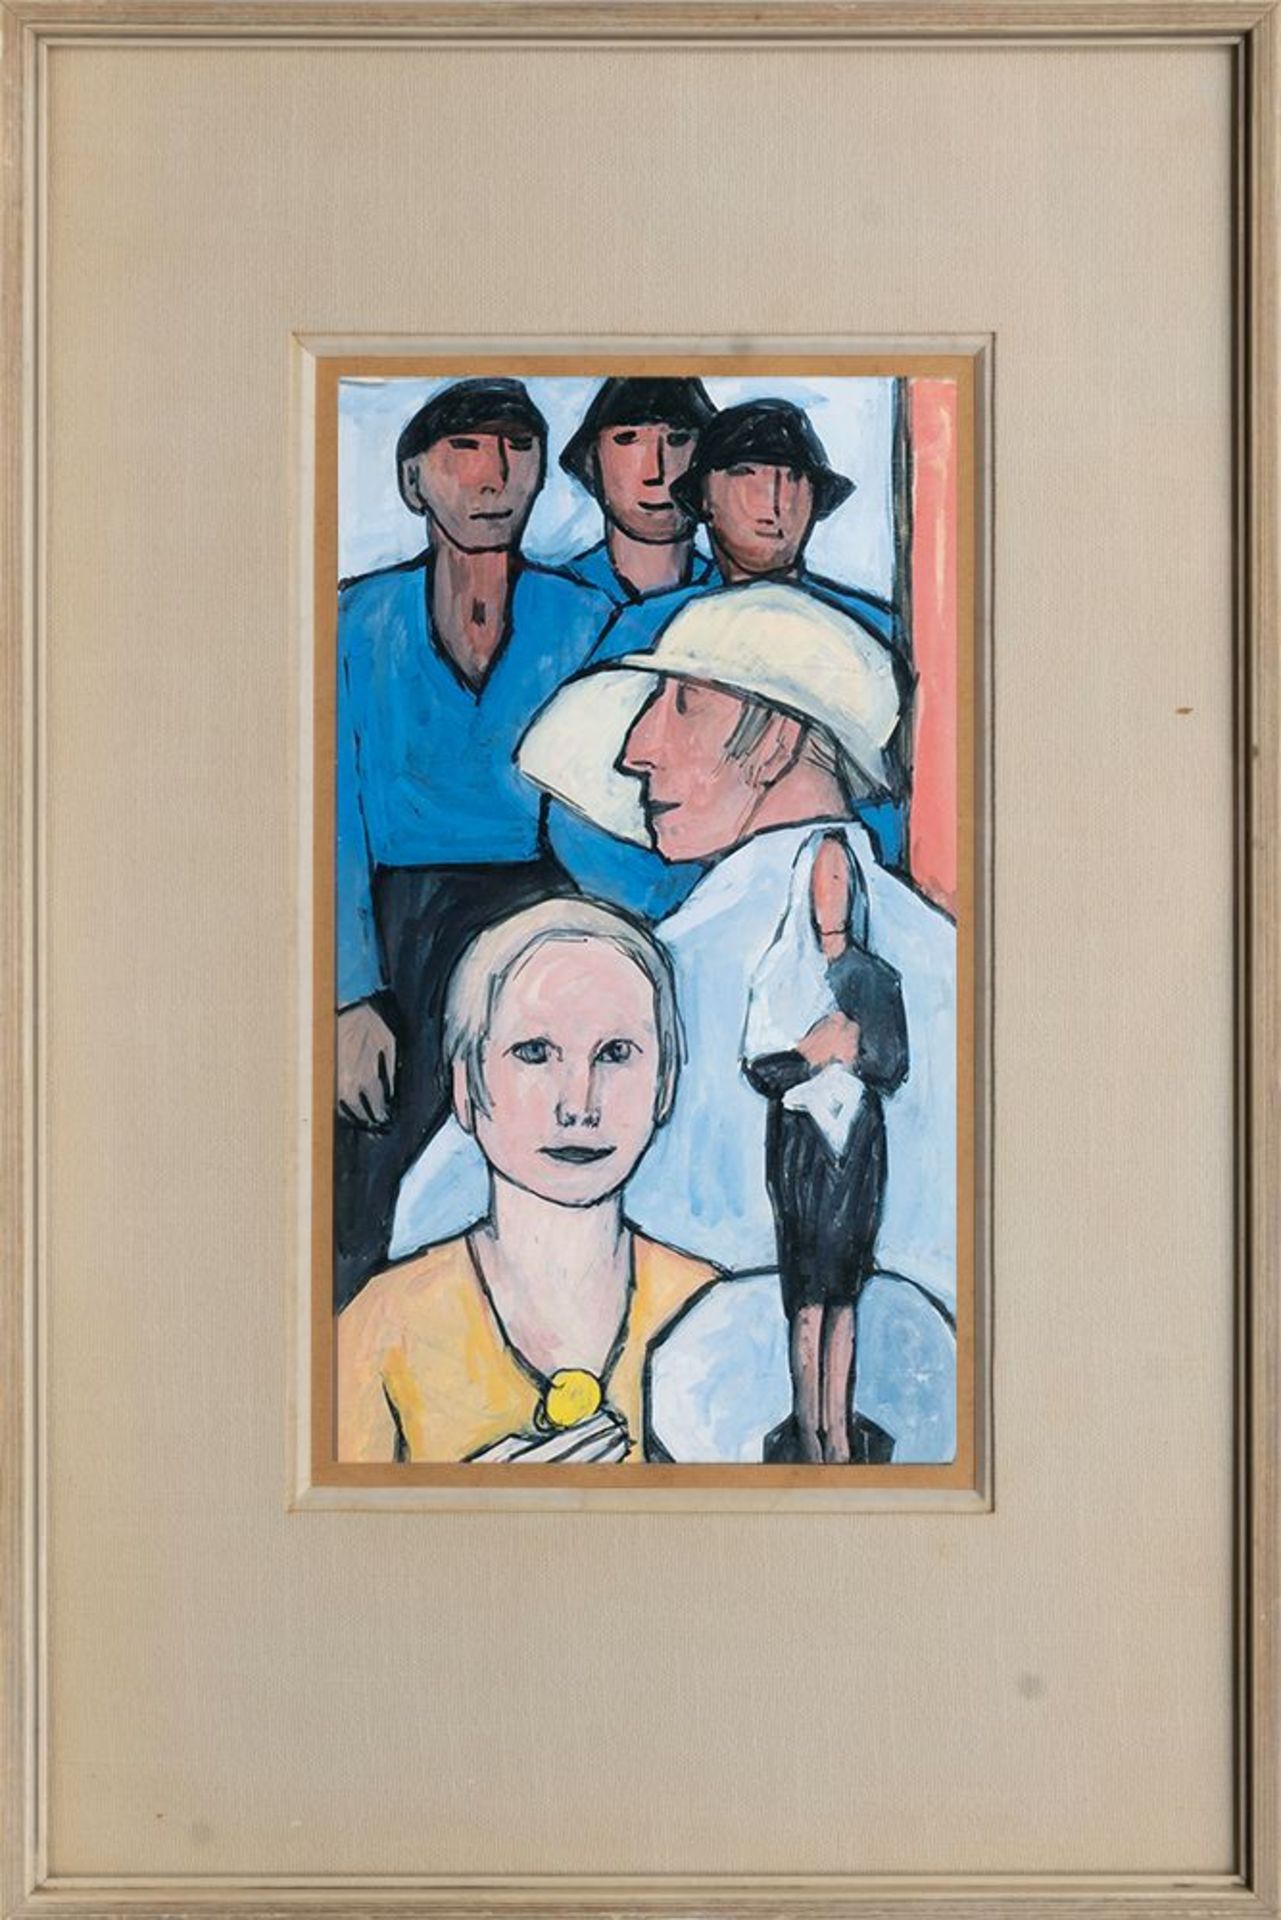 Lassen, Käte (Flensburg 1880 - Flensburg 1956). The Artist and her Works. - Image 2 of 2